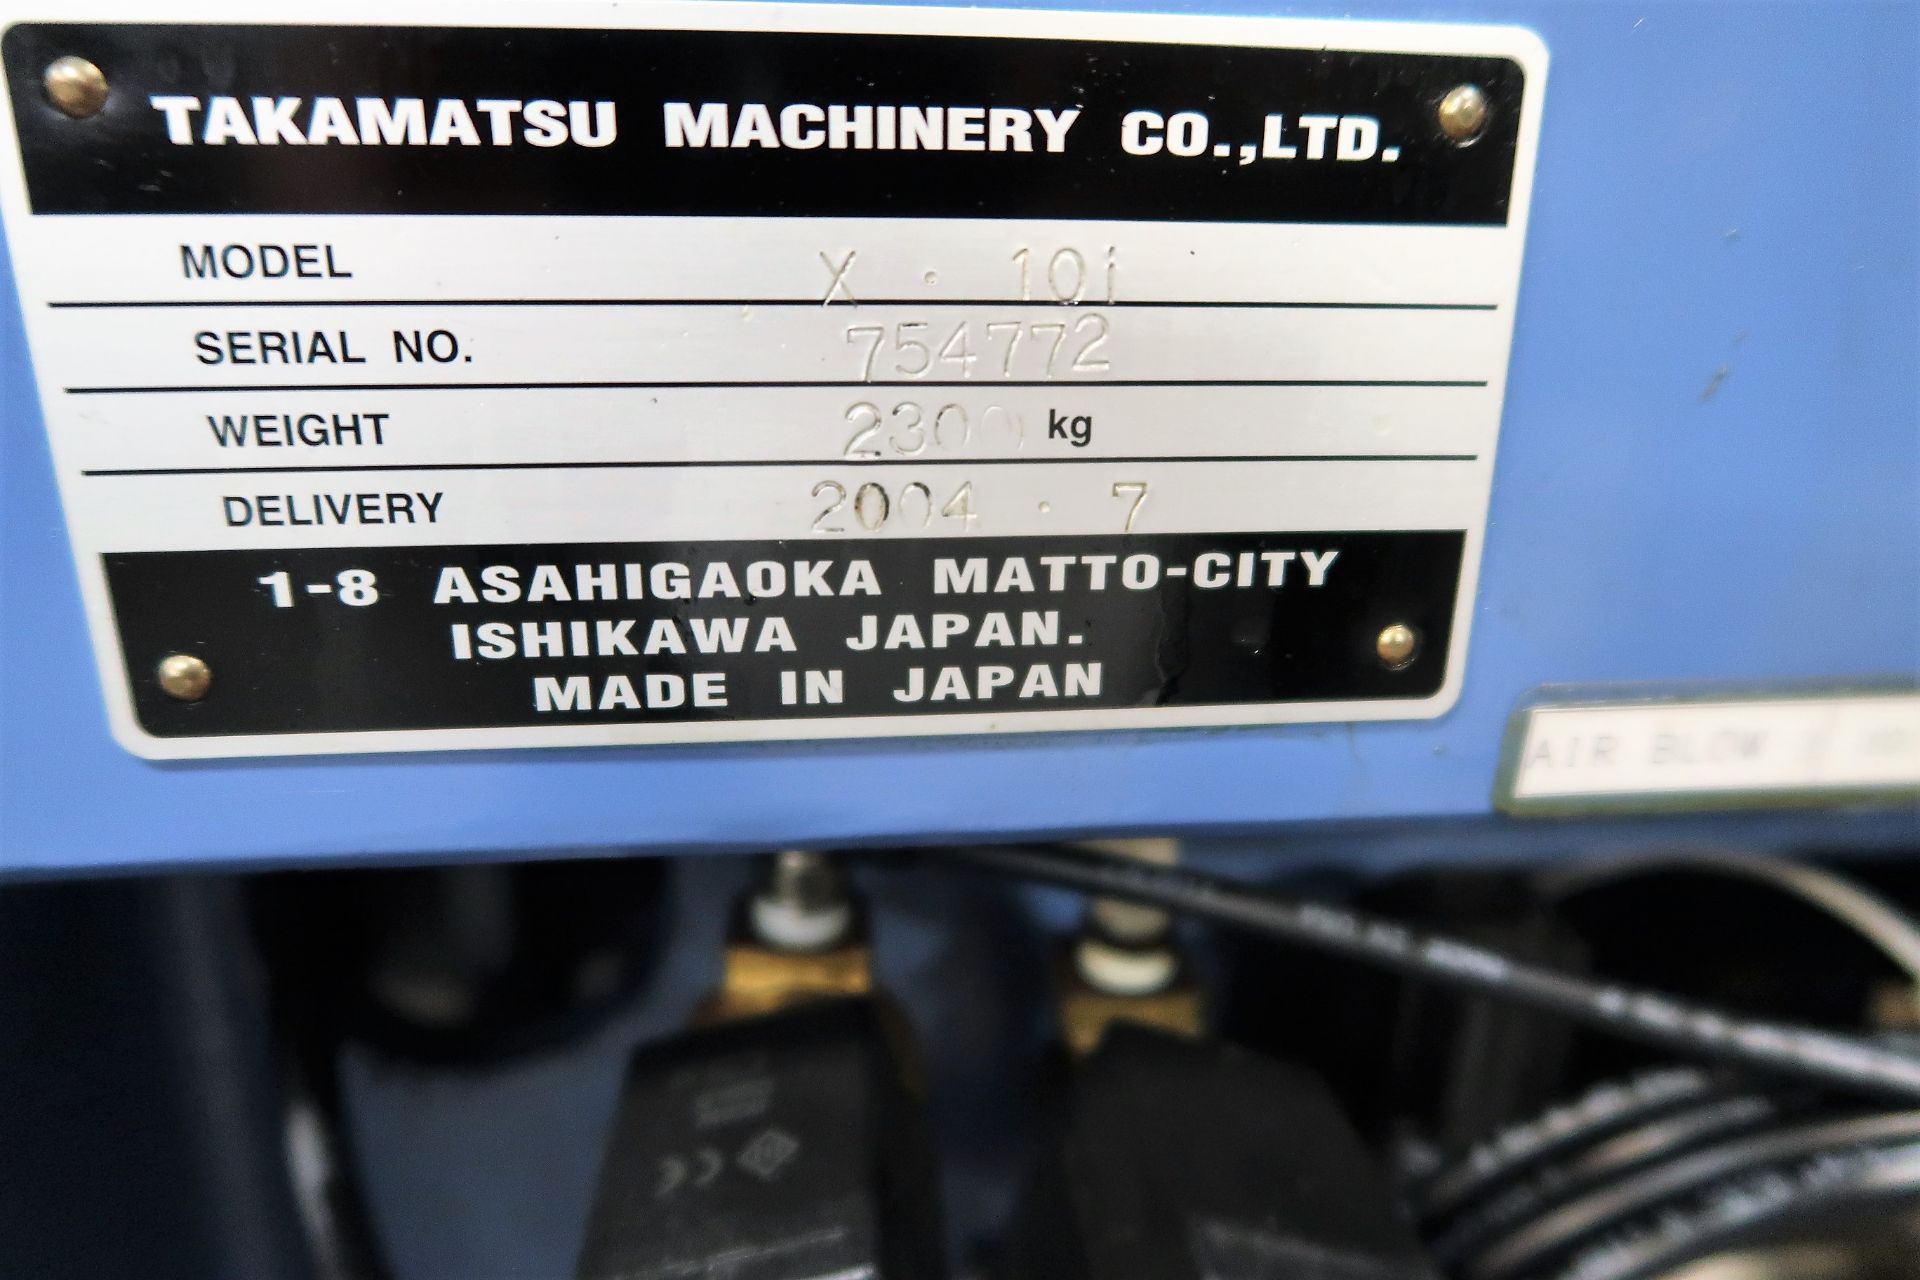 Takamaz X-10i CNC Turning Center with Auto Load/unload Robot, - Image 7 of 10